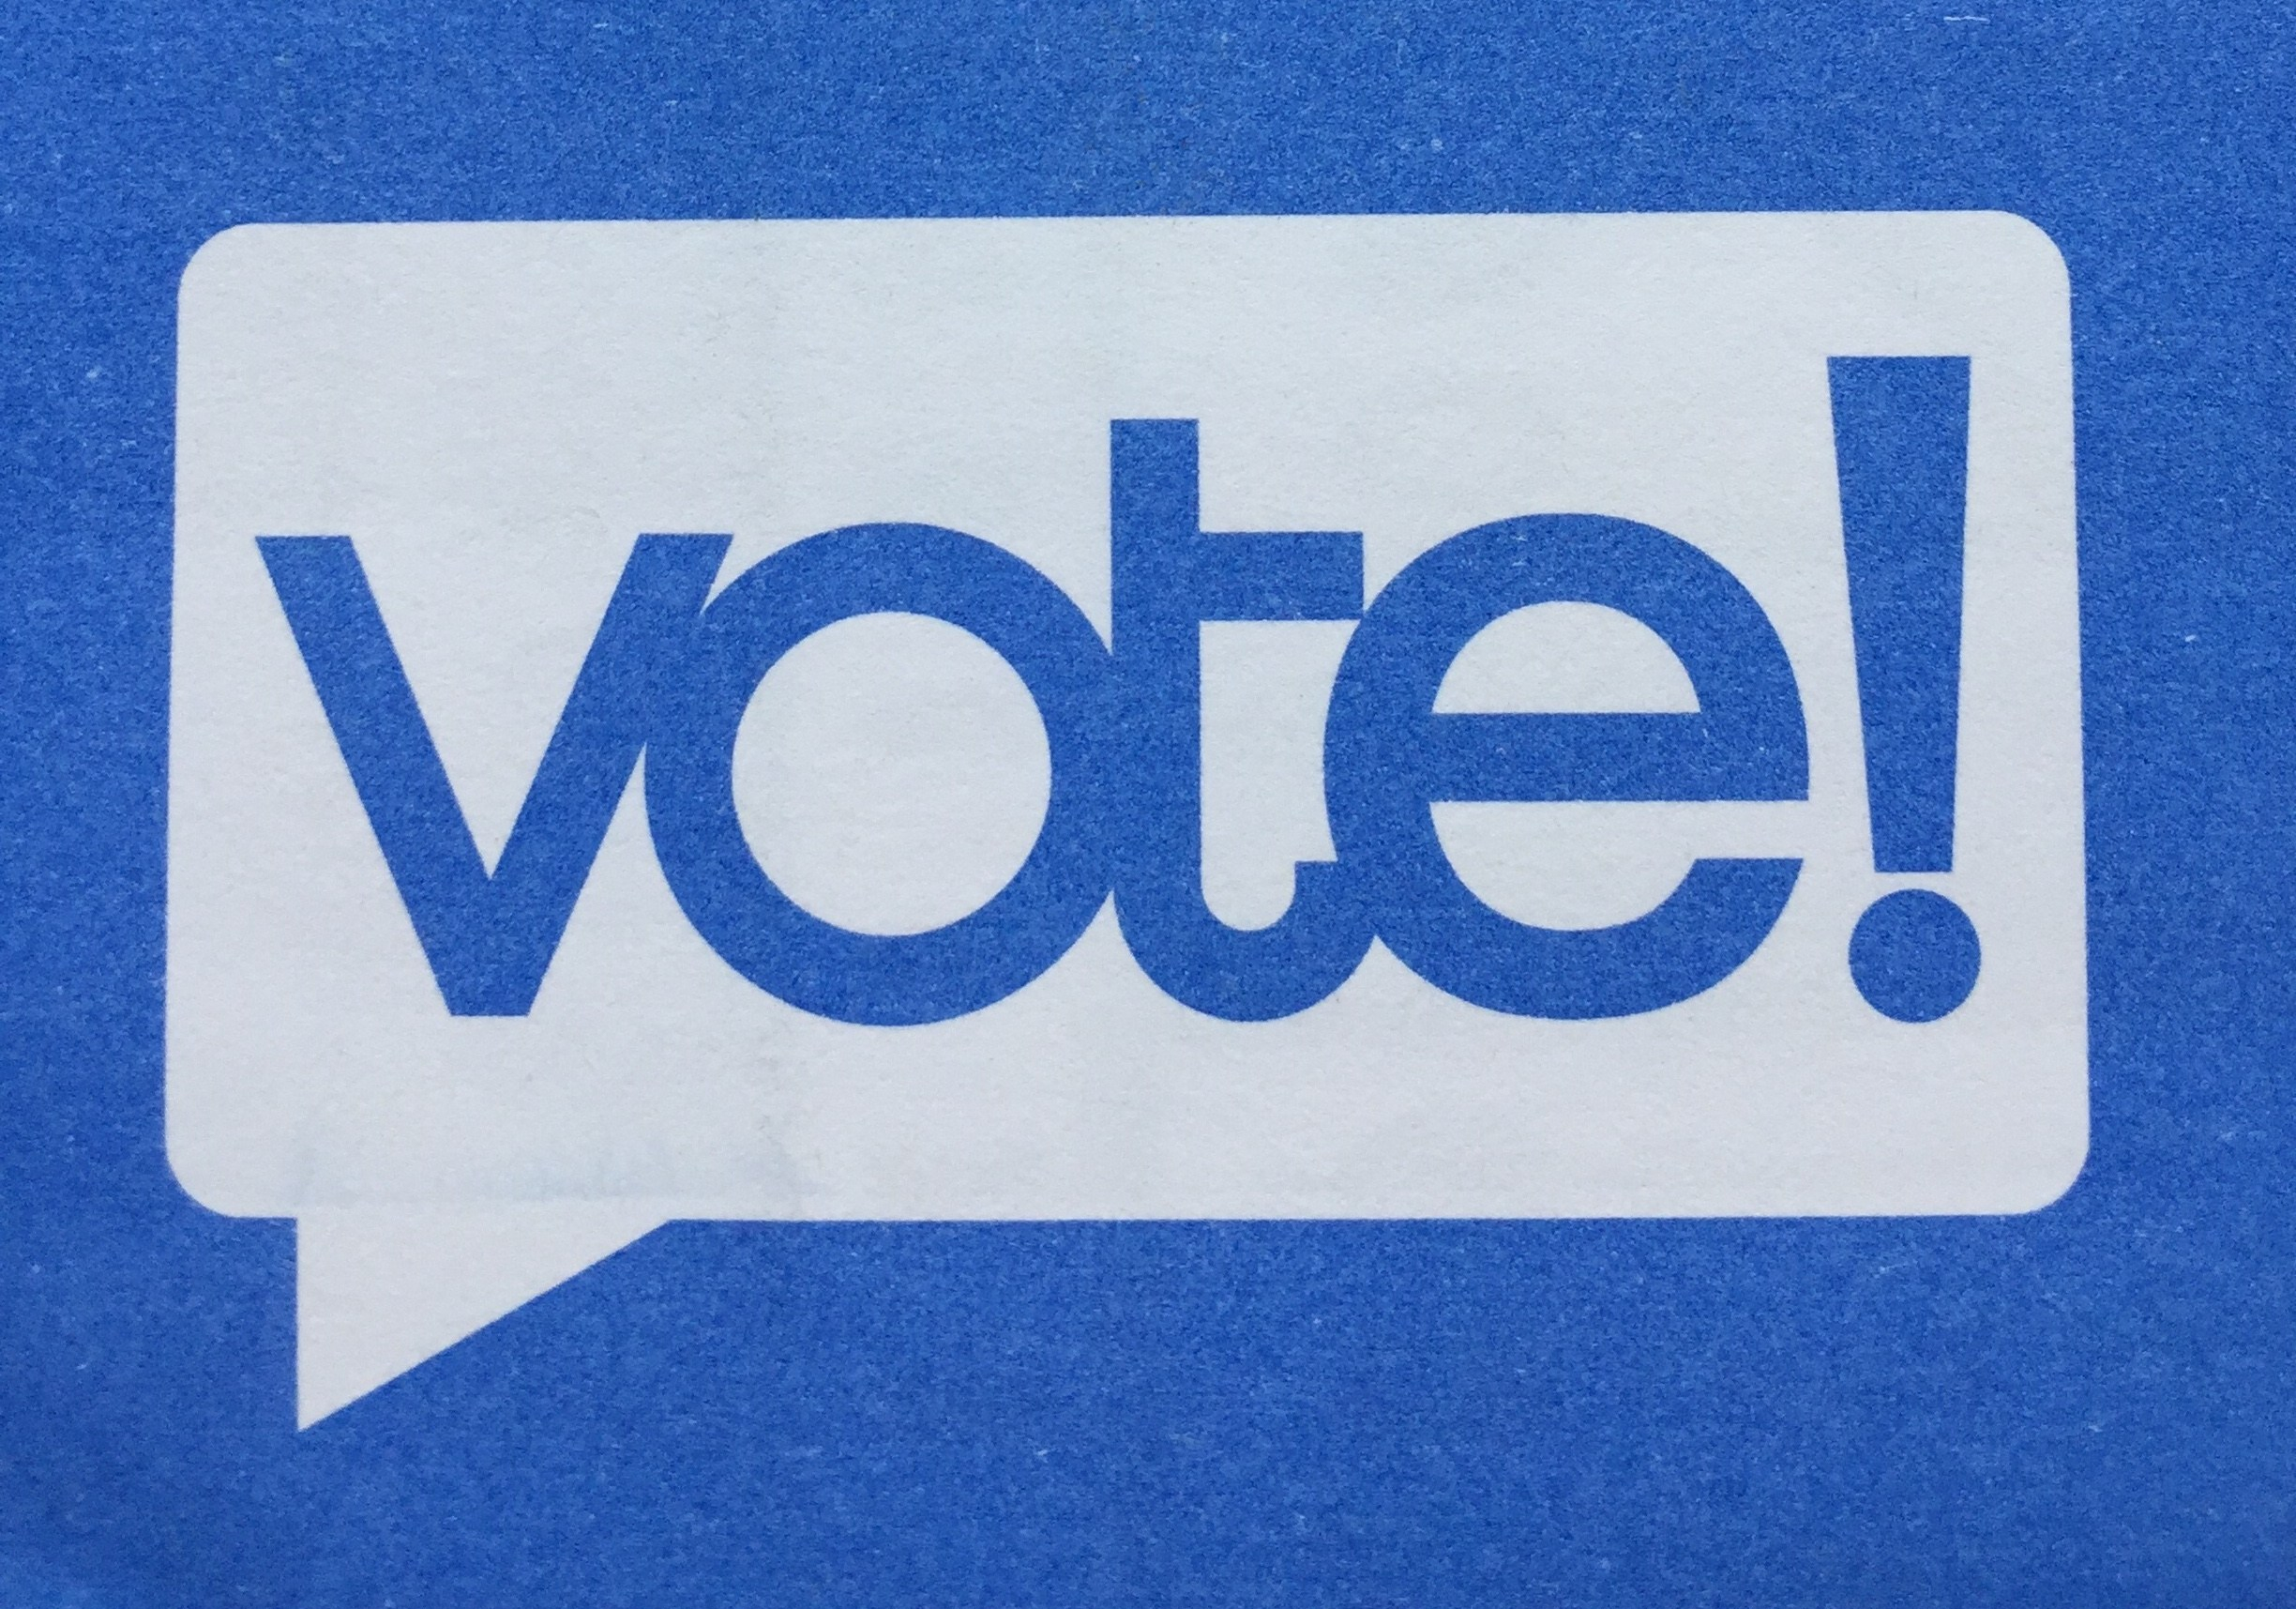 Vote logo on official ballot